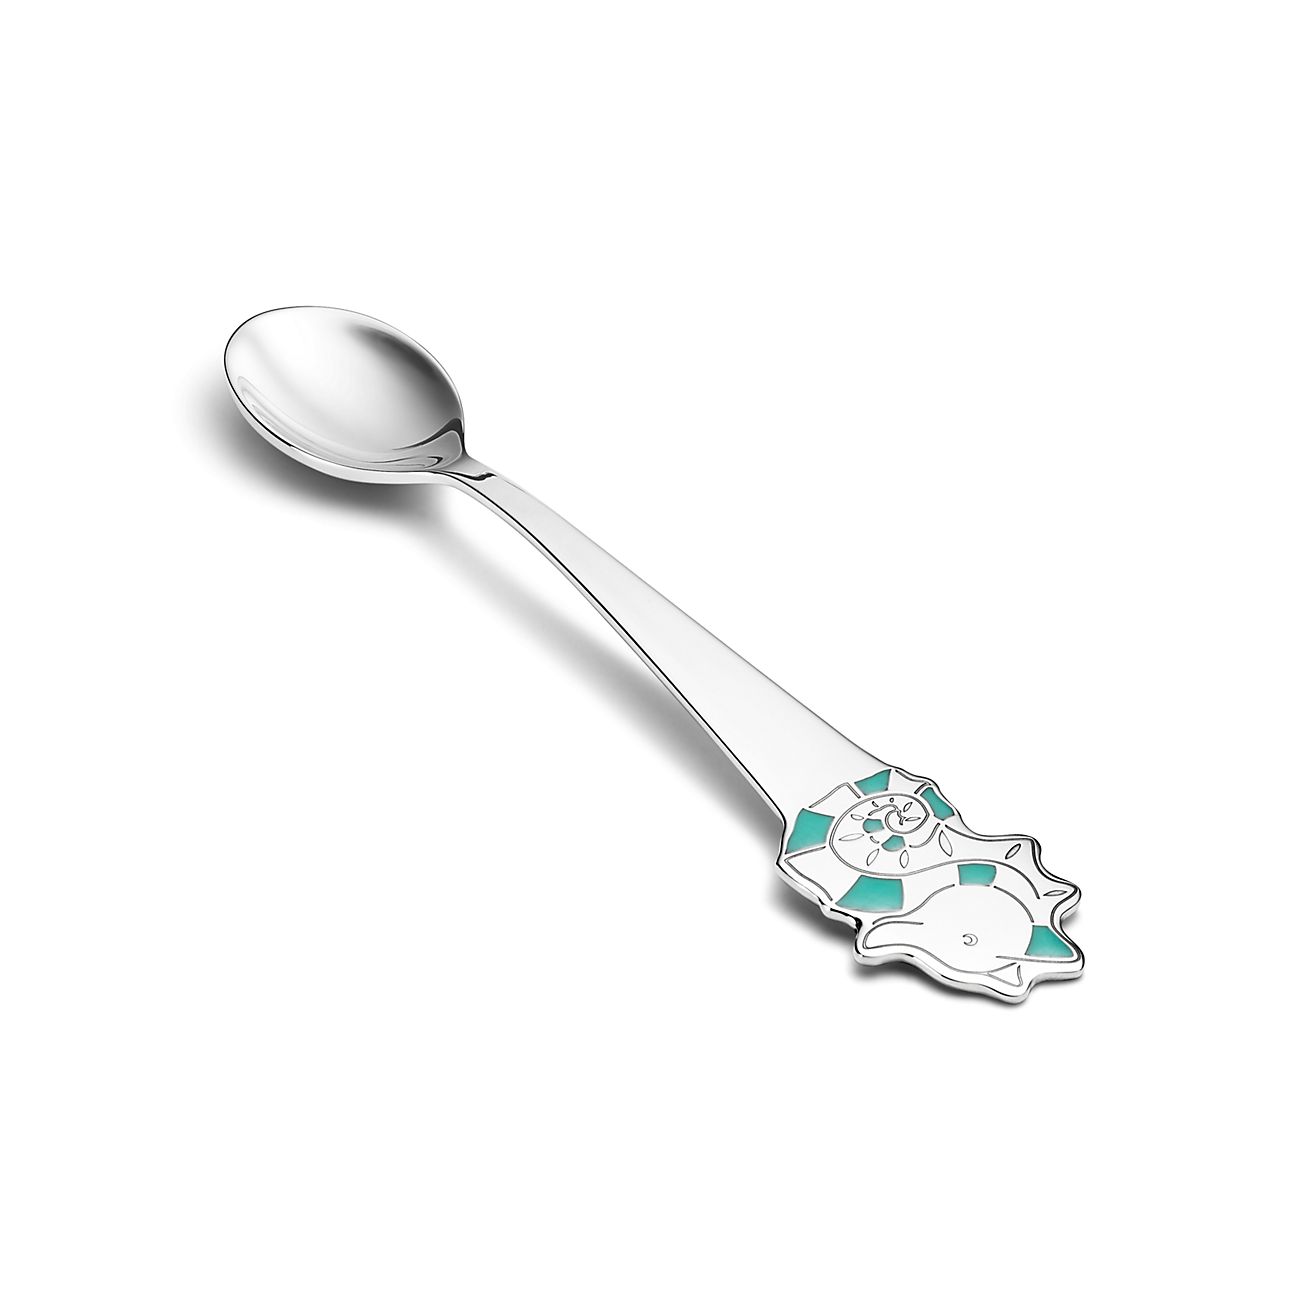 Elsa Peretti® Open Heart child's spoon in sterling silver.